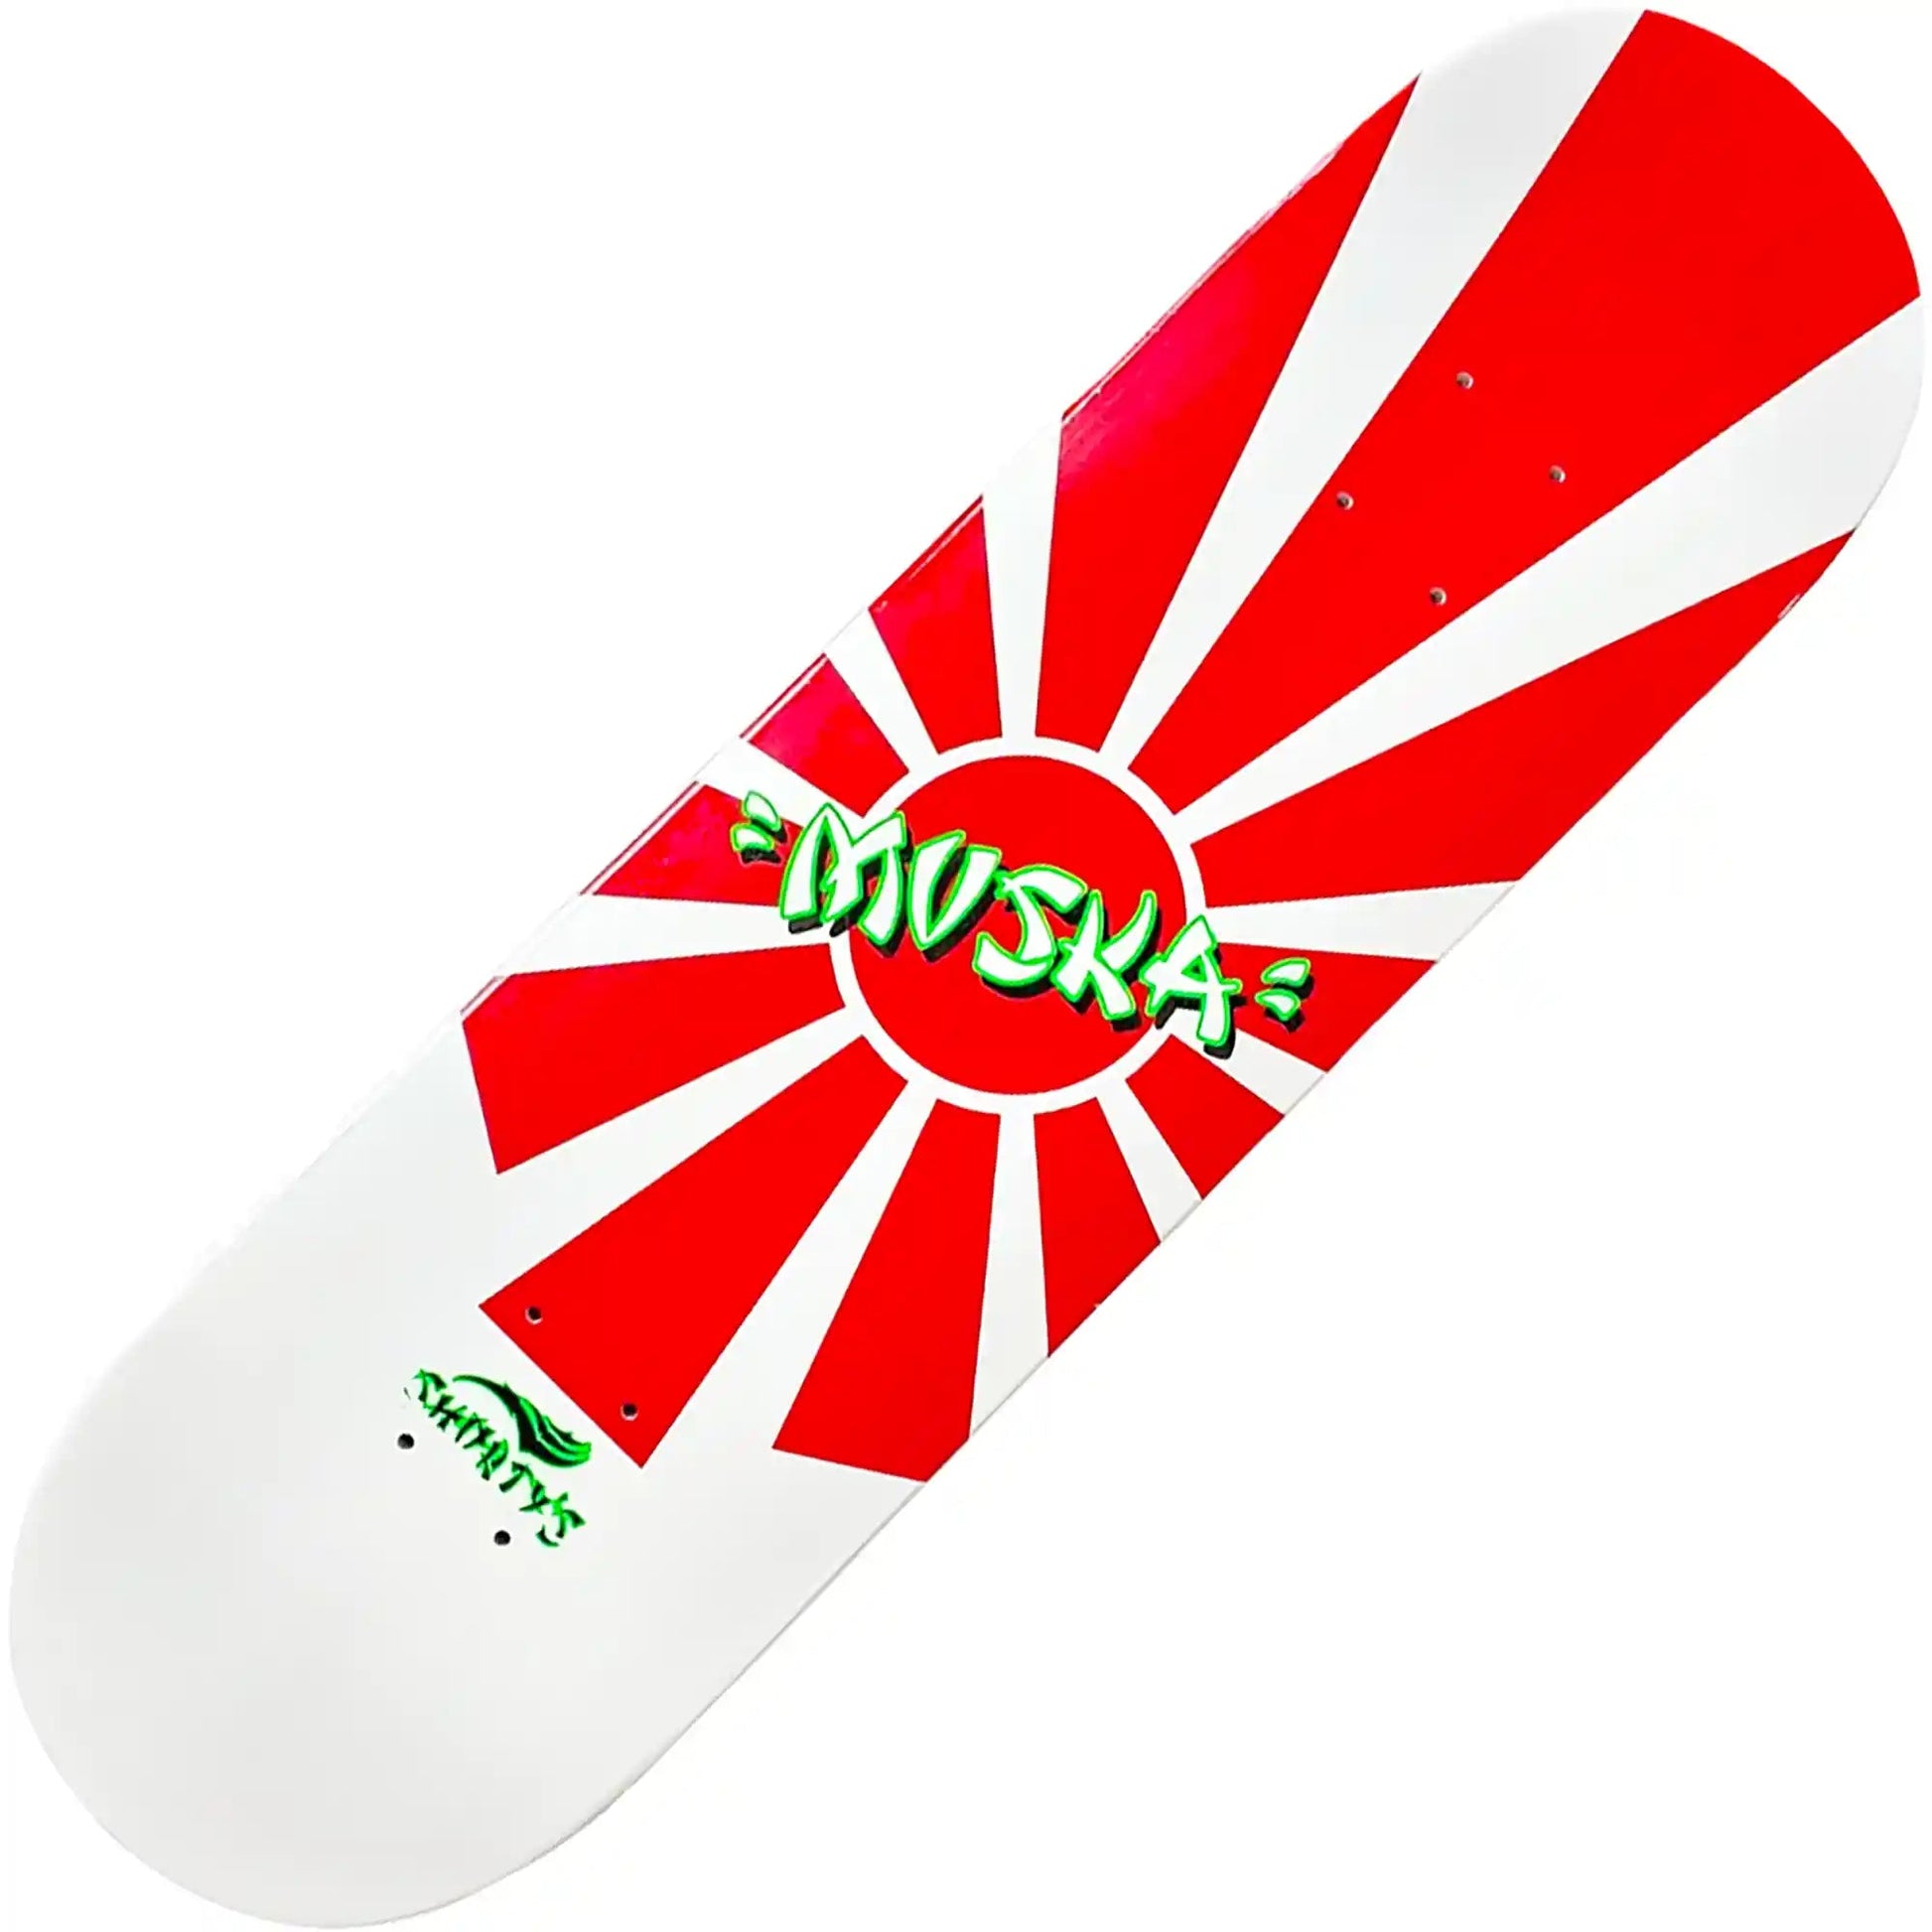 Shorty's Muska Sun Deck (Red) (8.25") - Tiki Room Skateboards - 1